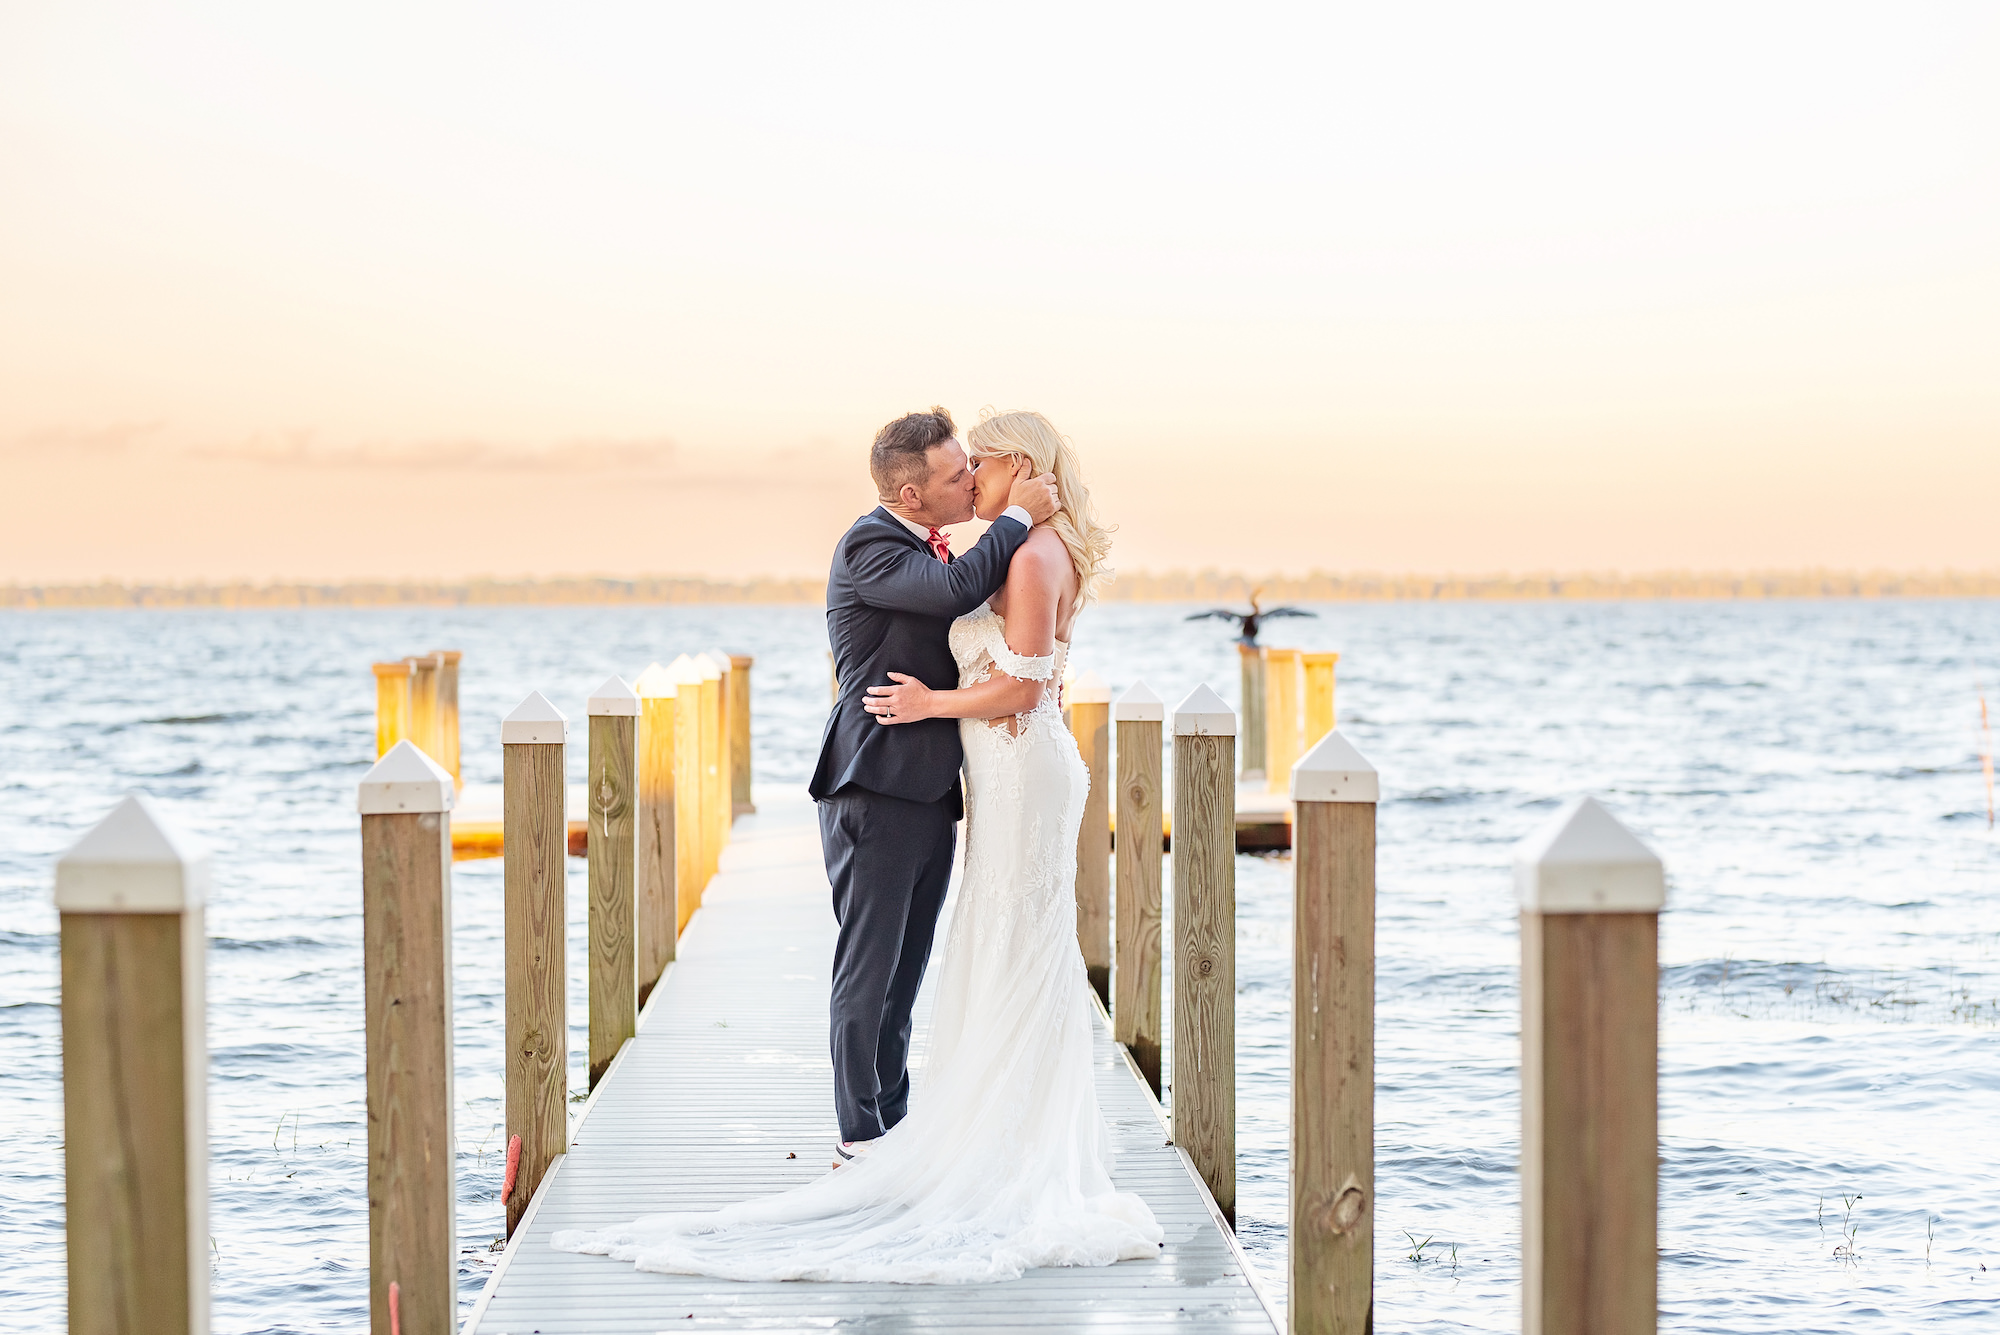 Romantic Bride and Groom Dock Wedding Portrait | Lake Wales Venue Bella Cosa | Tampa Bay Wedding Photographer Kristen Marie Photography